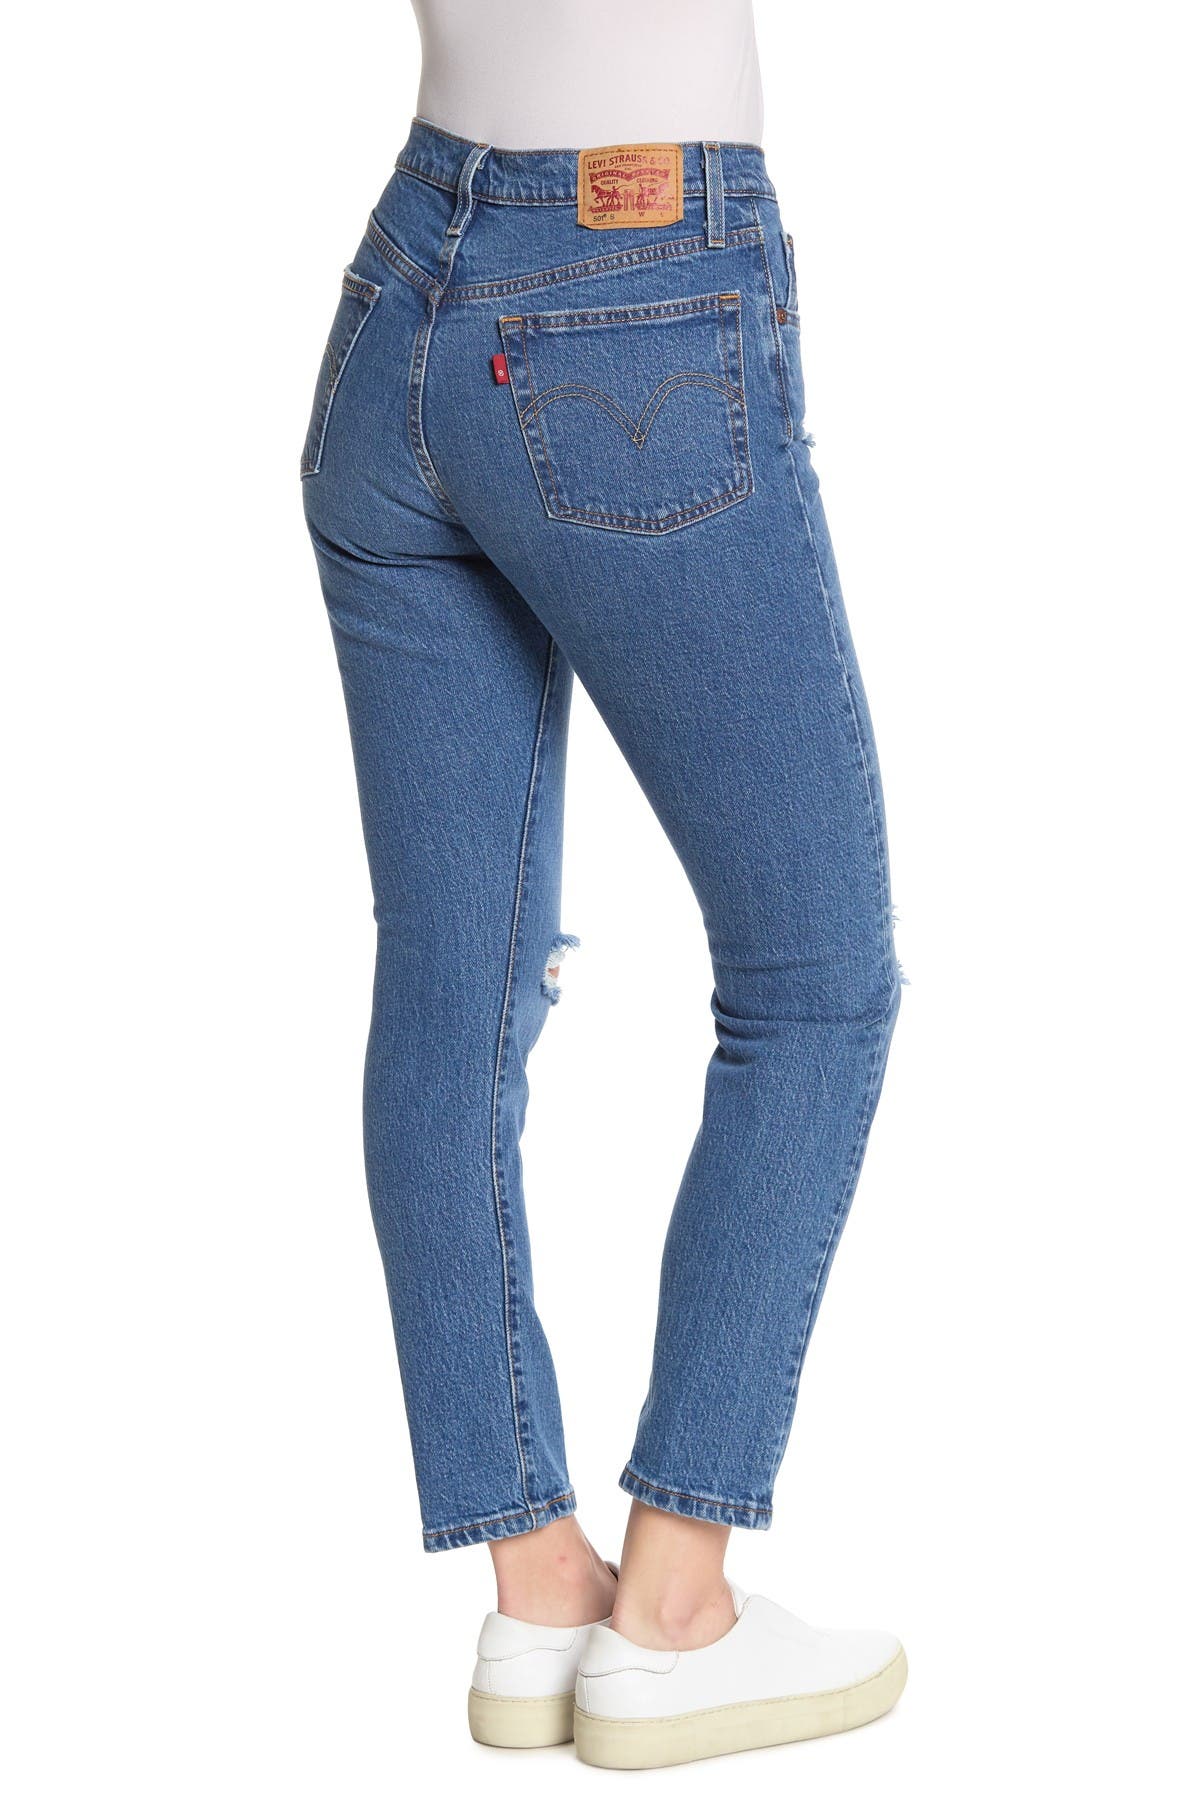 levi's 501 distressed skinny jeans